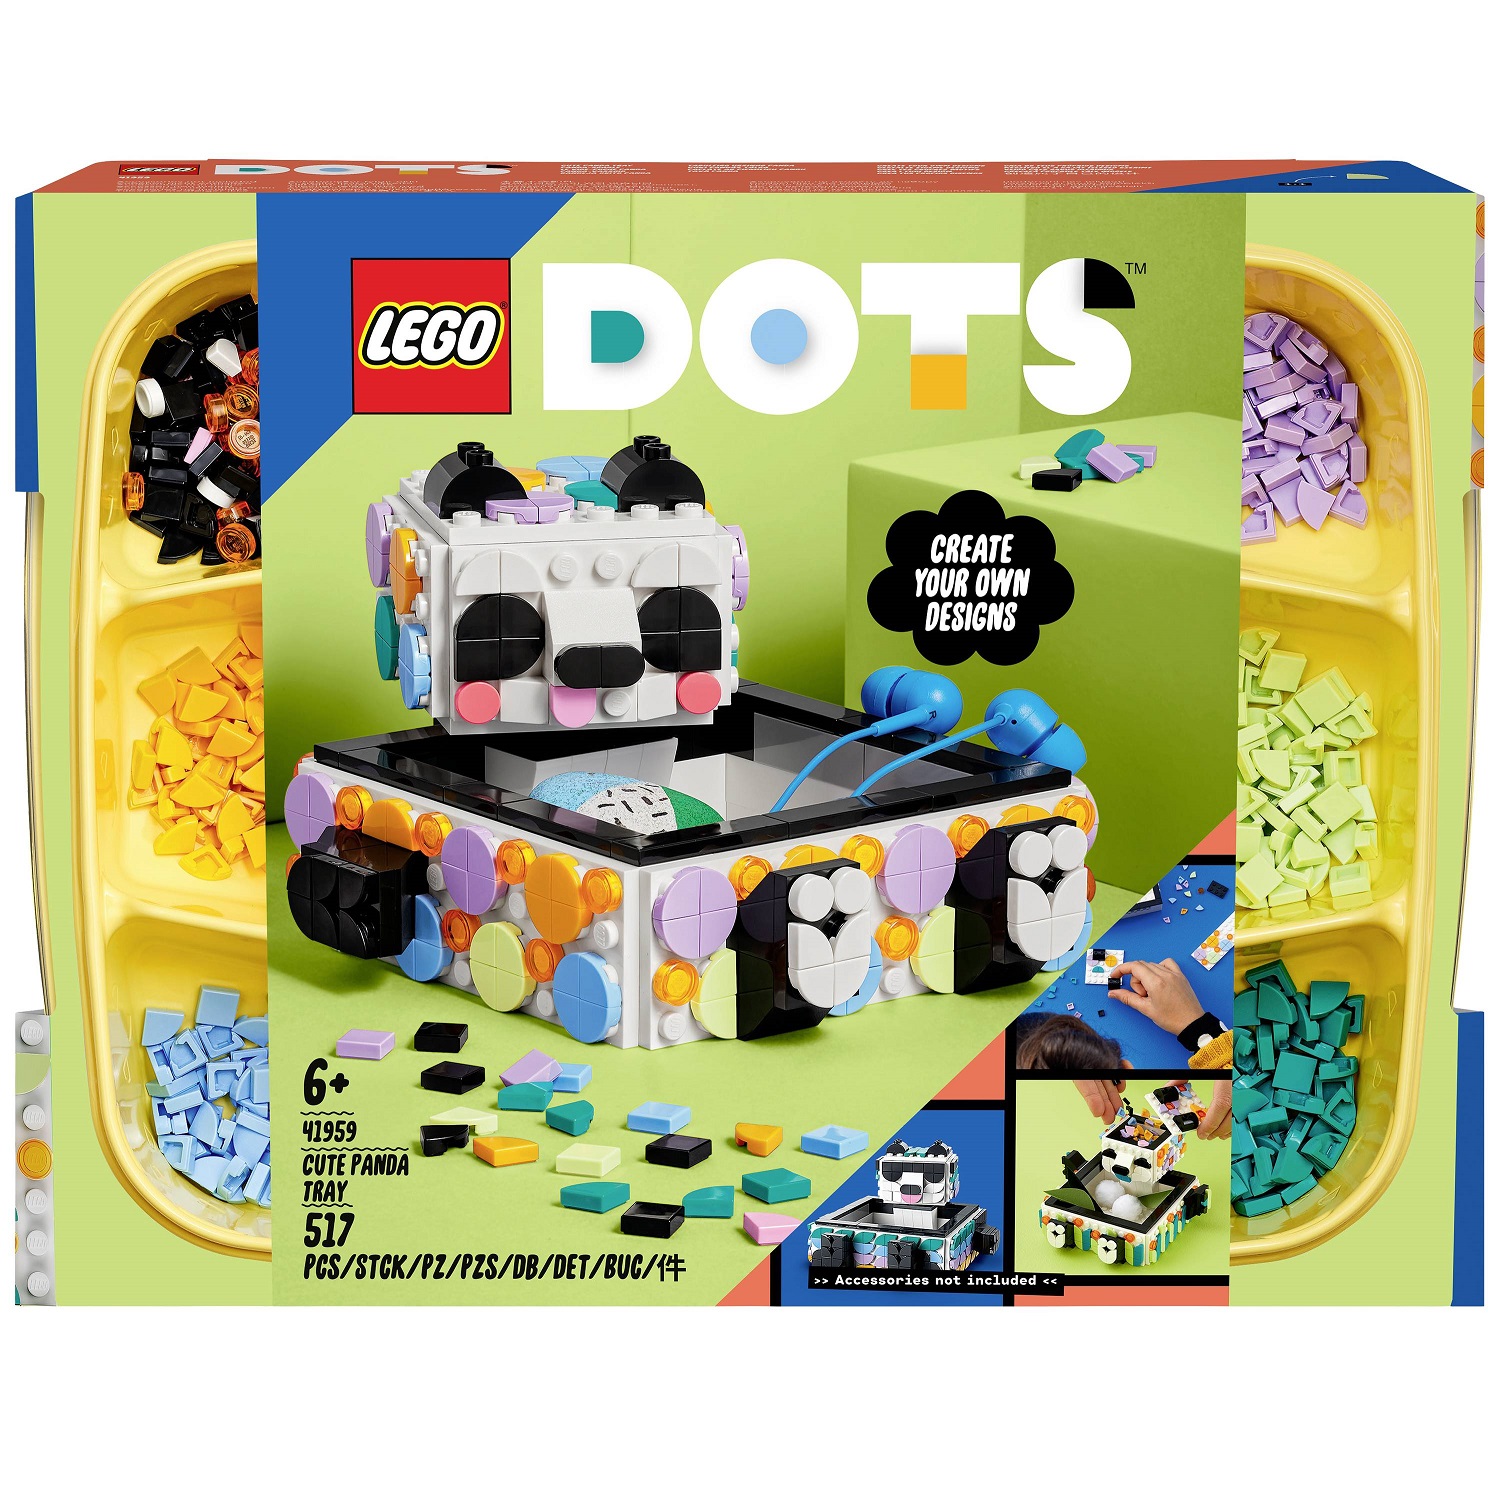 Конструктор LEGO DOTs Ящик з милою пандою, 517 деталей (41959) - фото 1